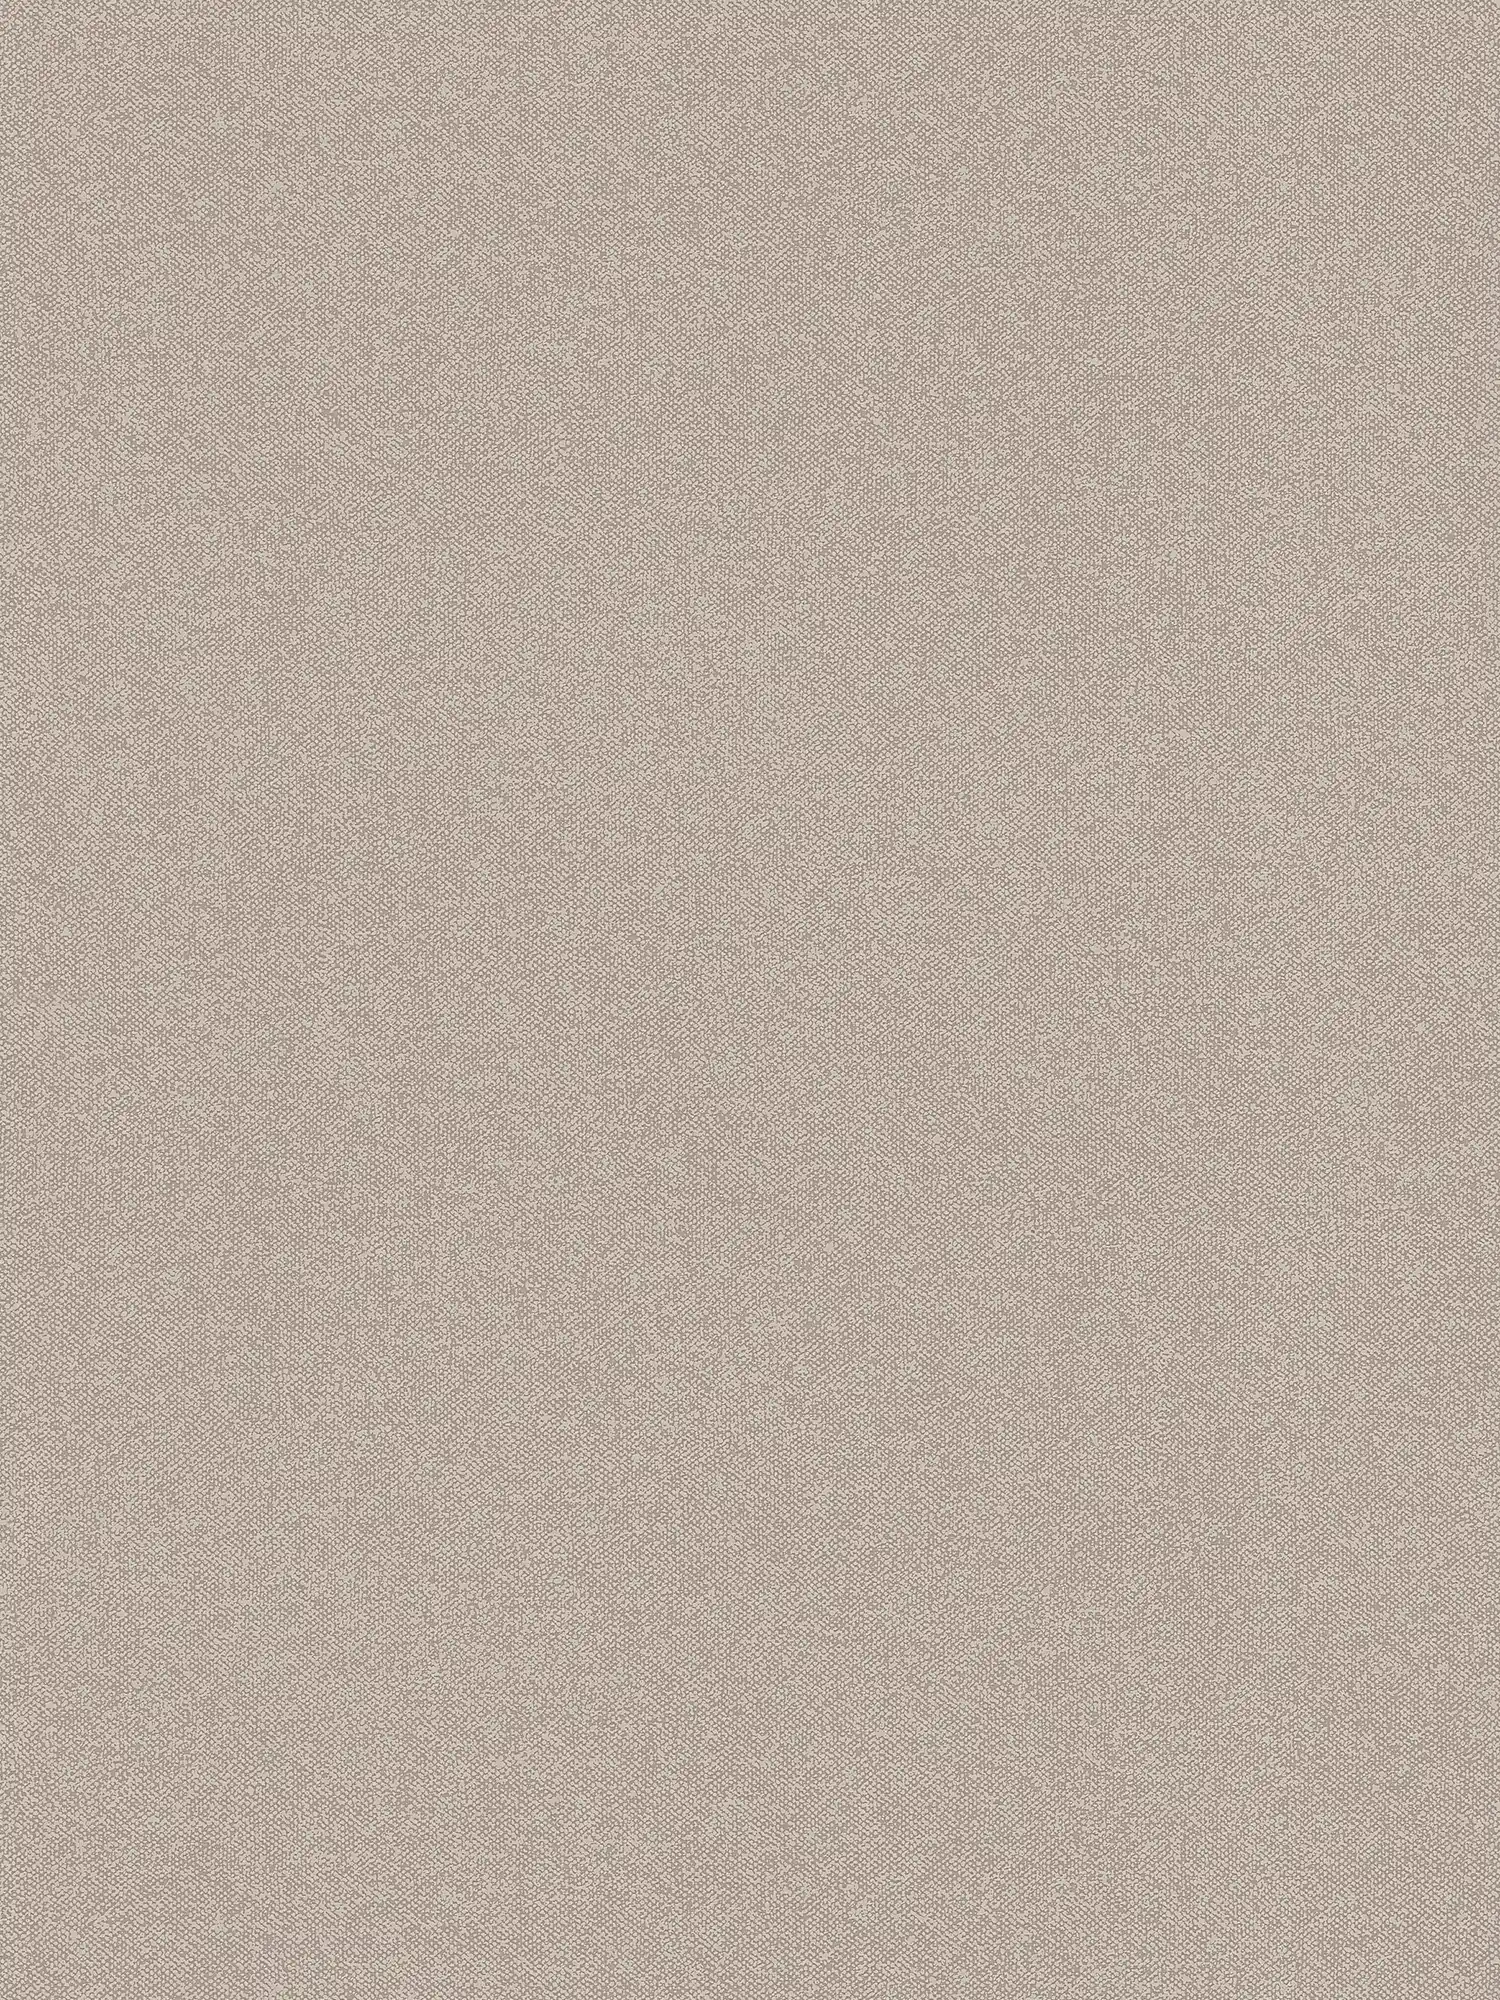 Plain textured wallpaper with linen look - brown
